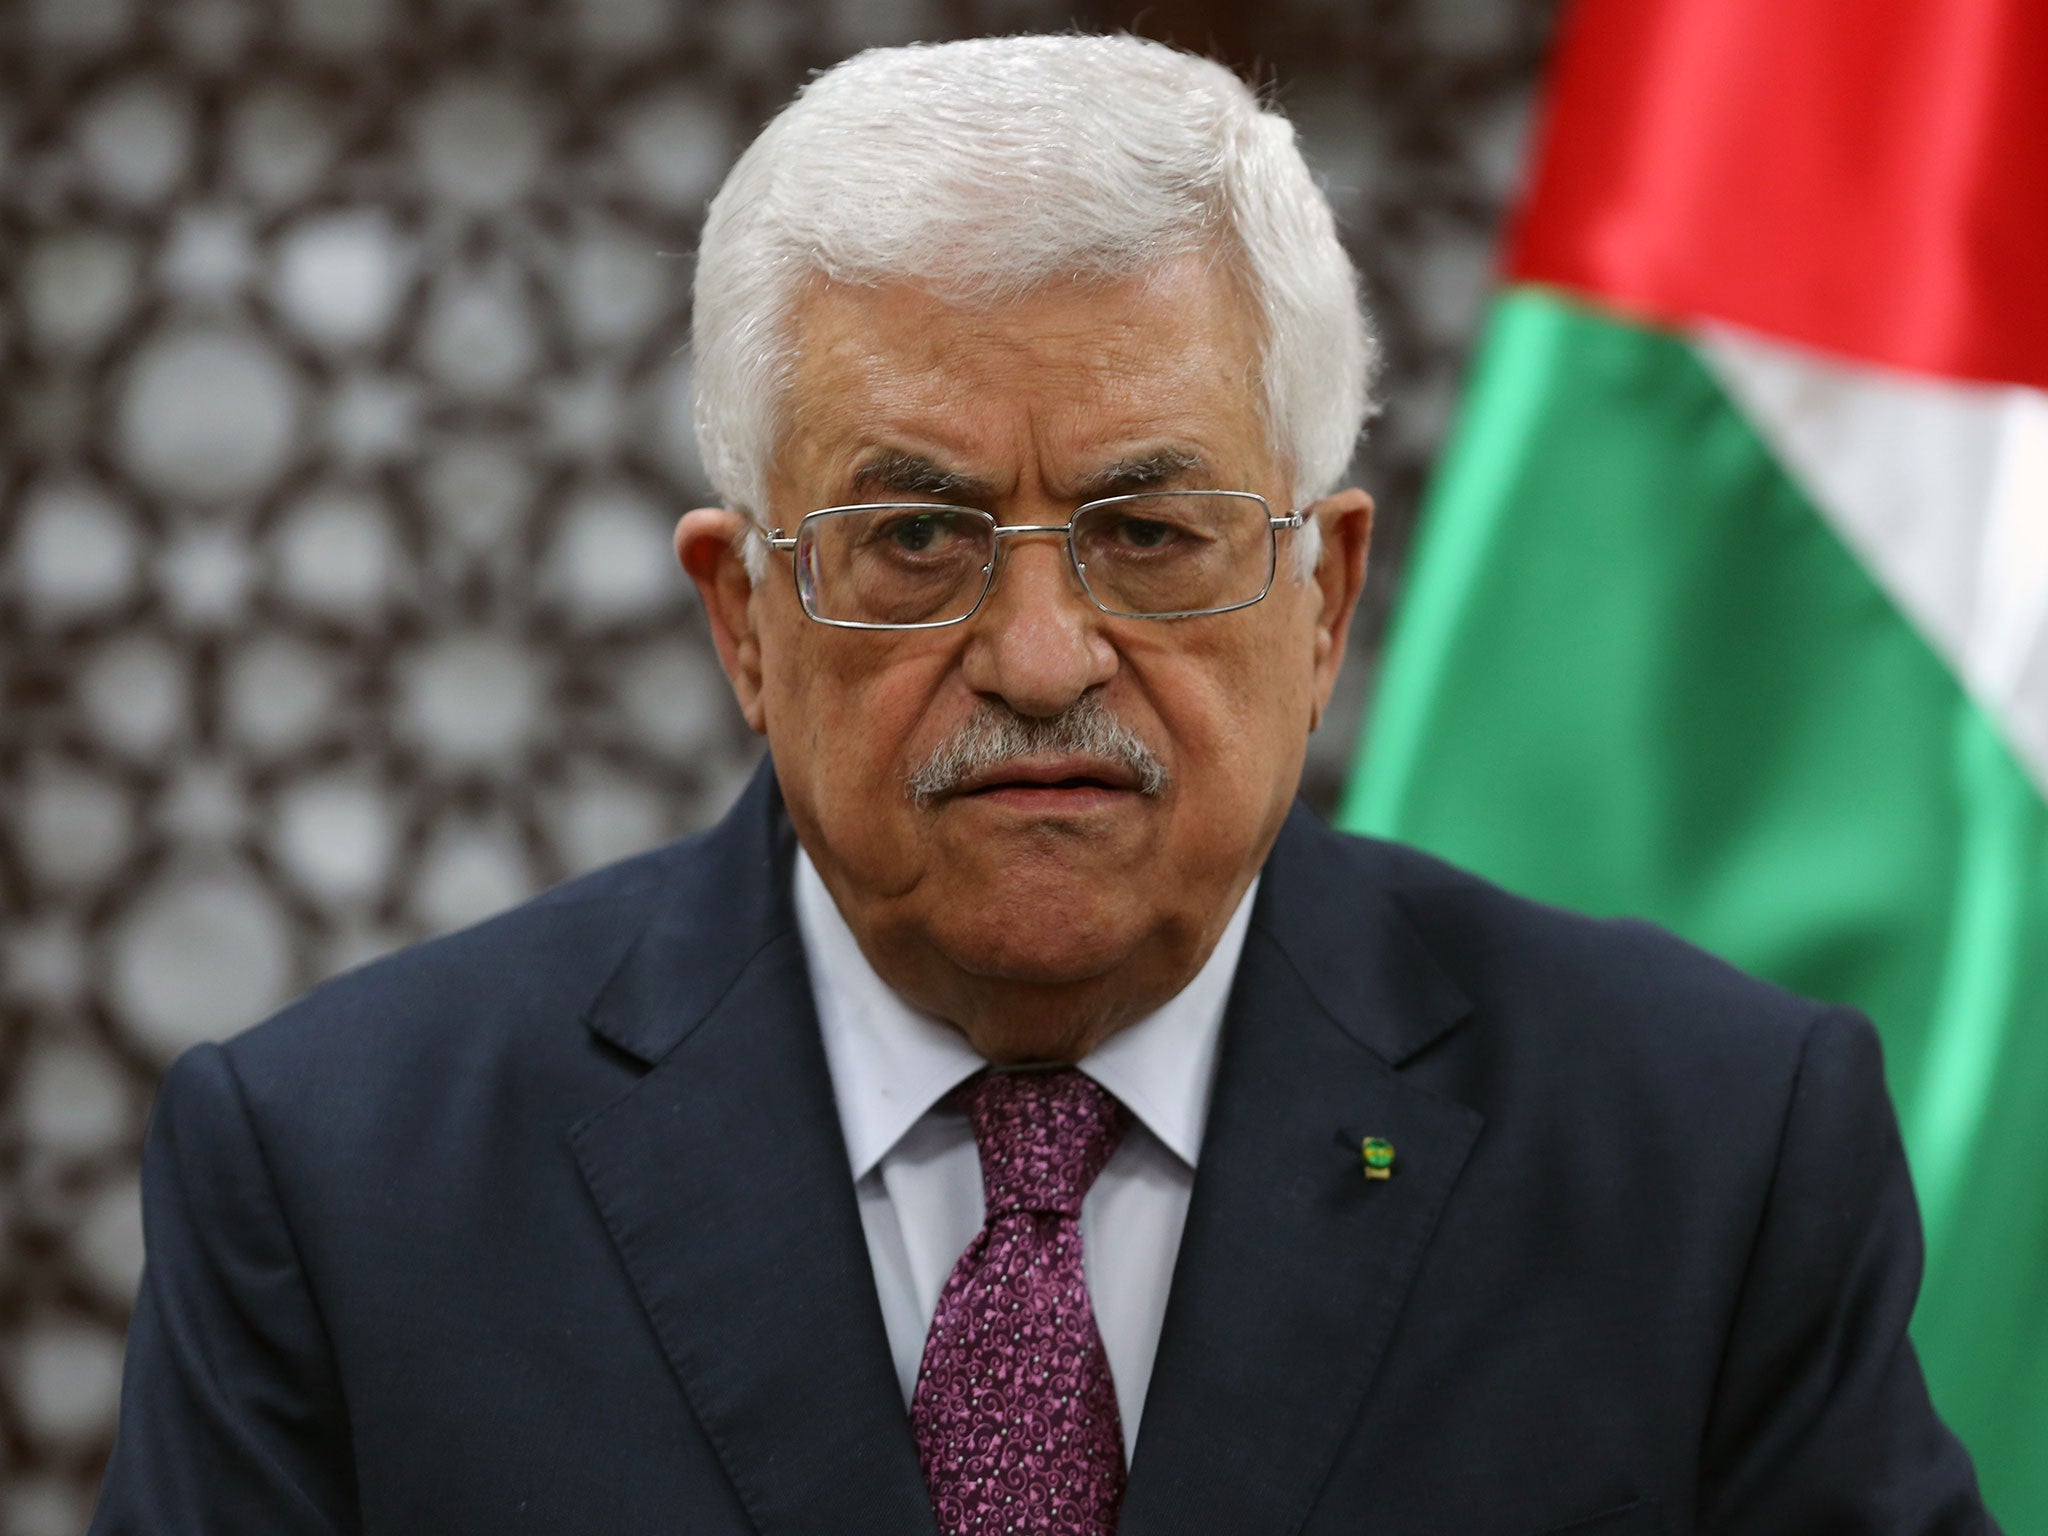 Palestinian President Mahmoud Abbas has written to US President-elect Donald Trump to dissade him from the idea, Palestinian news agency Wafa said